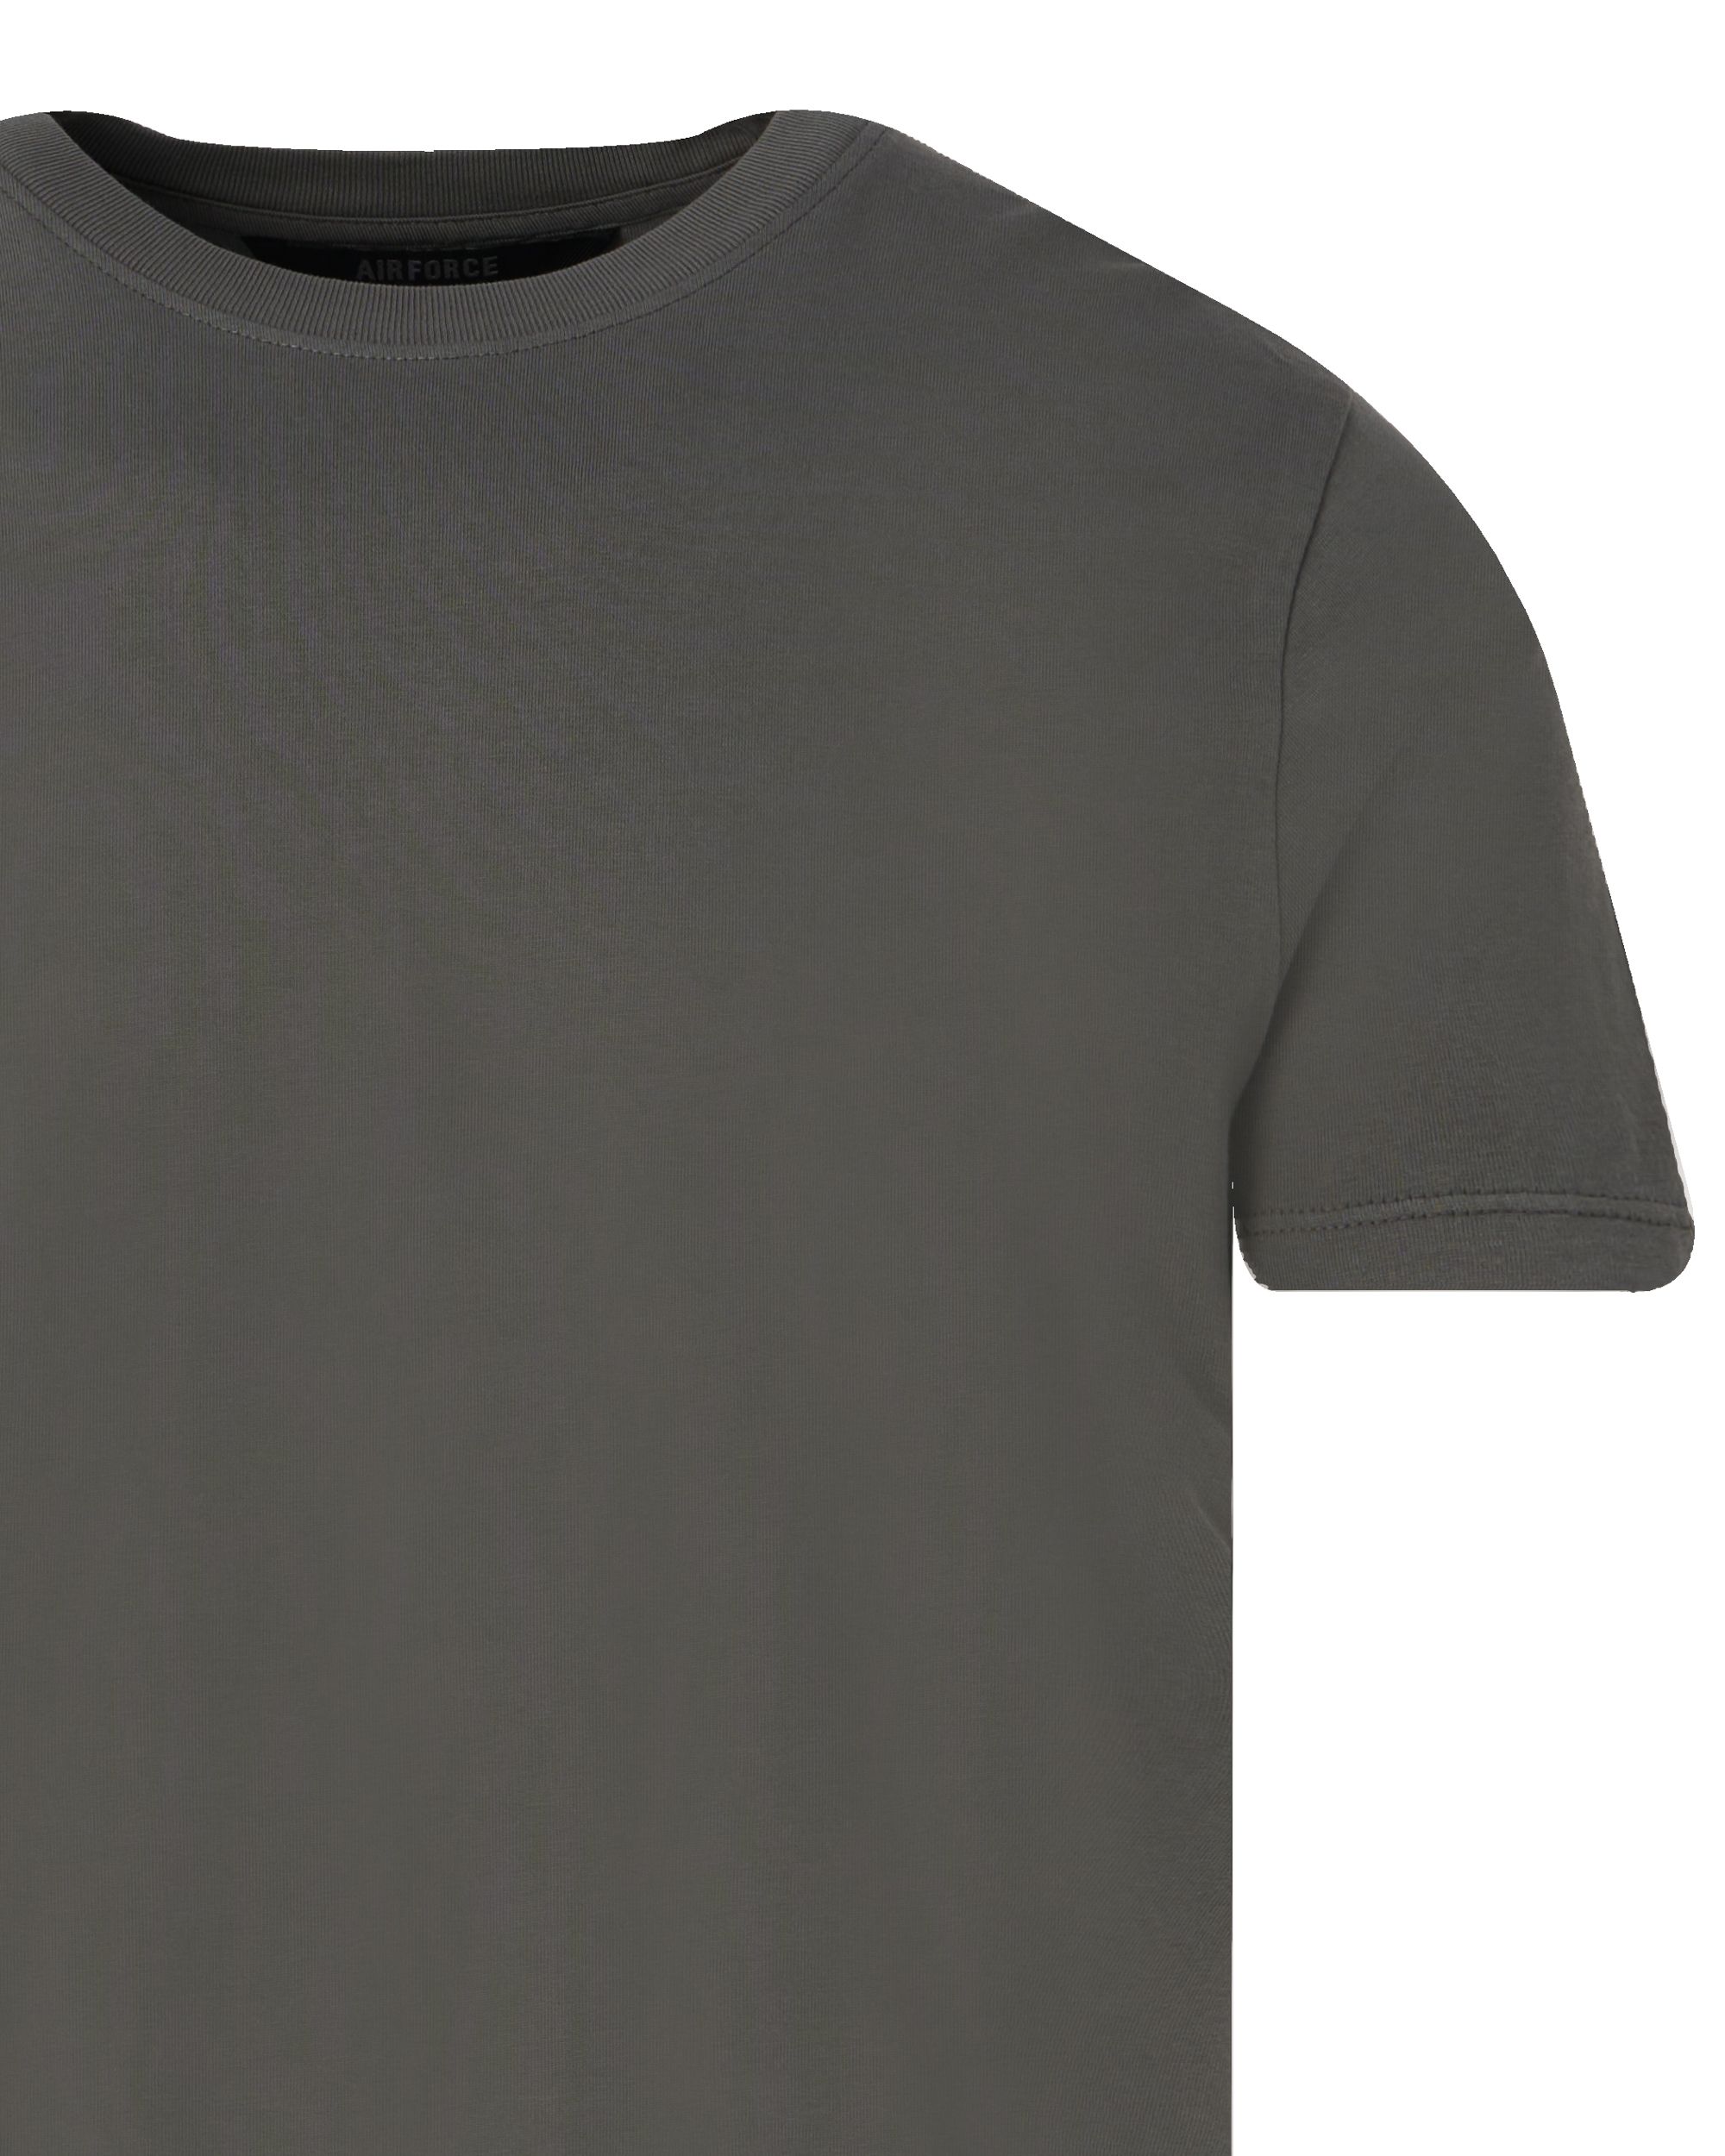 Airforce T-shirt KM Grijs 092921-001-L